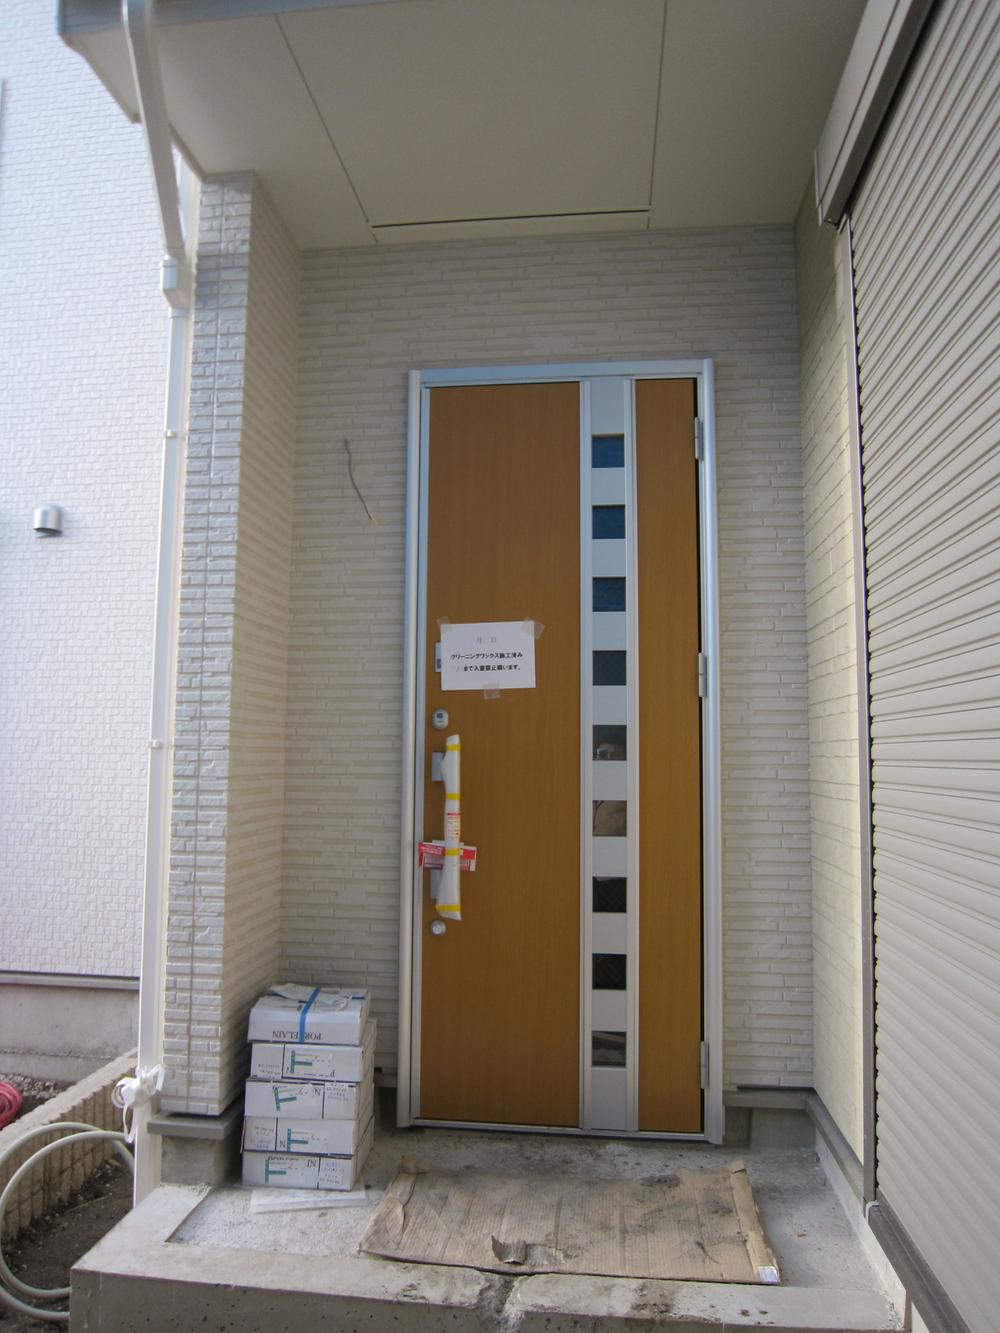 Entrance. 1 Building (2013 December 21 shooting)